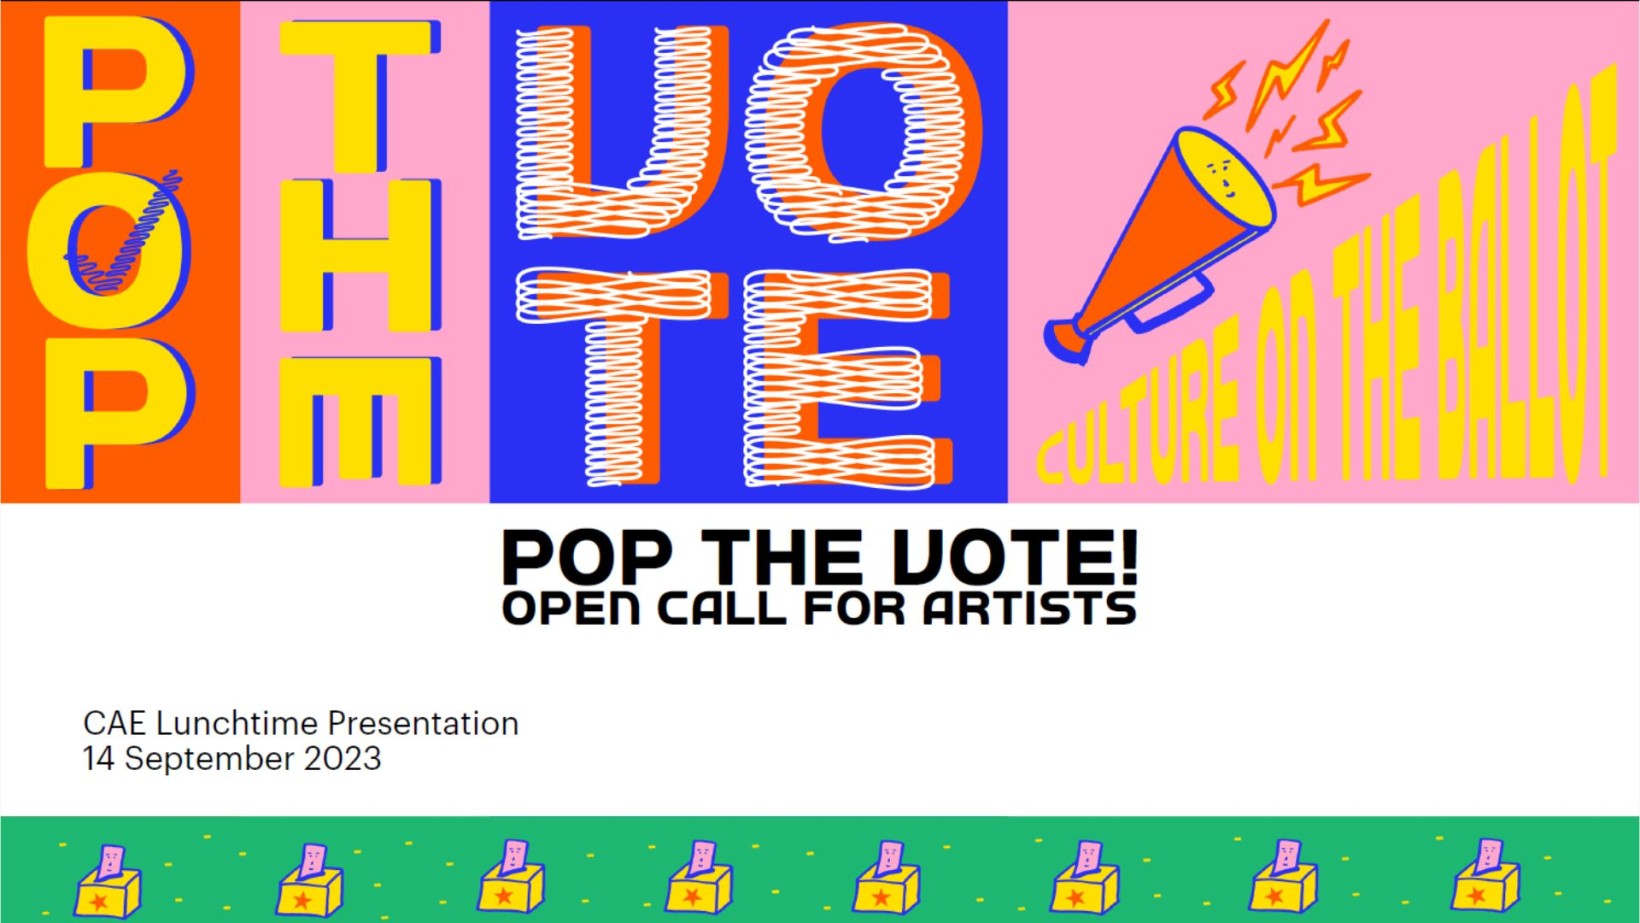 kolorowe litery kolaż, napis "pop the vote"